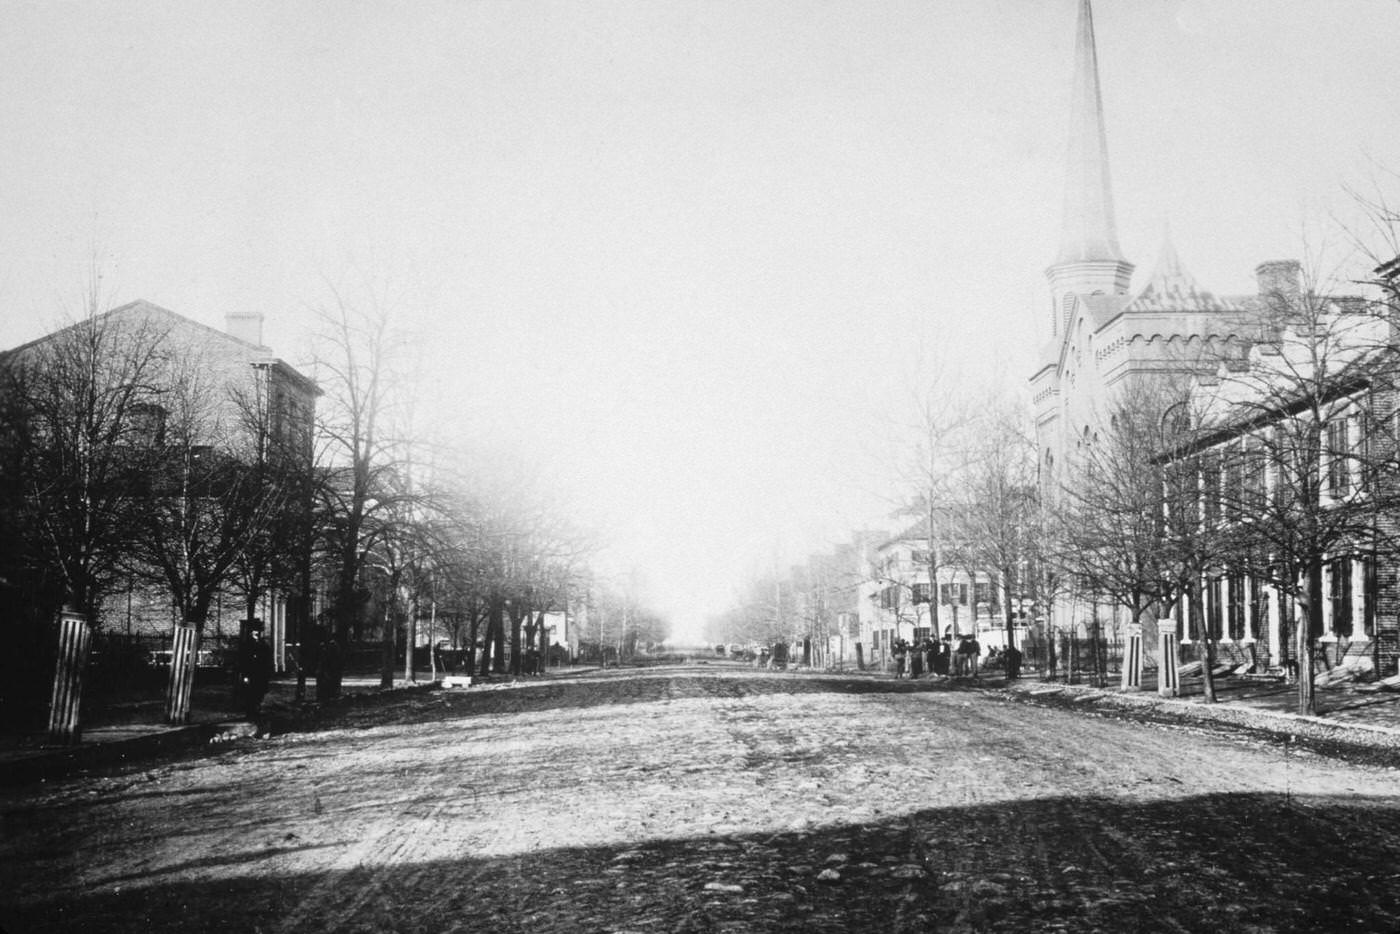 Washington Street, Alexandria, Virginia during the US civil war, 1861.